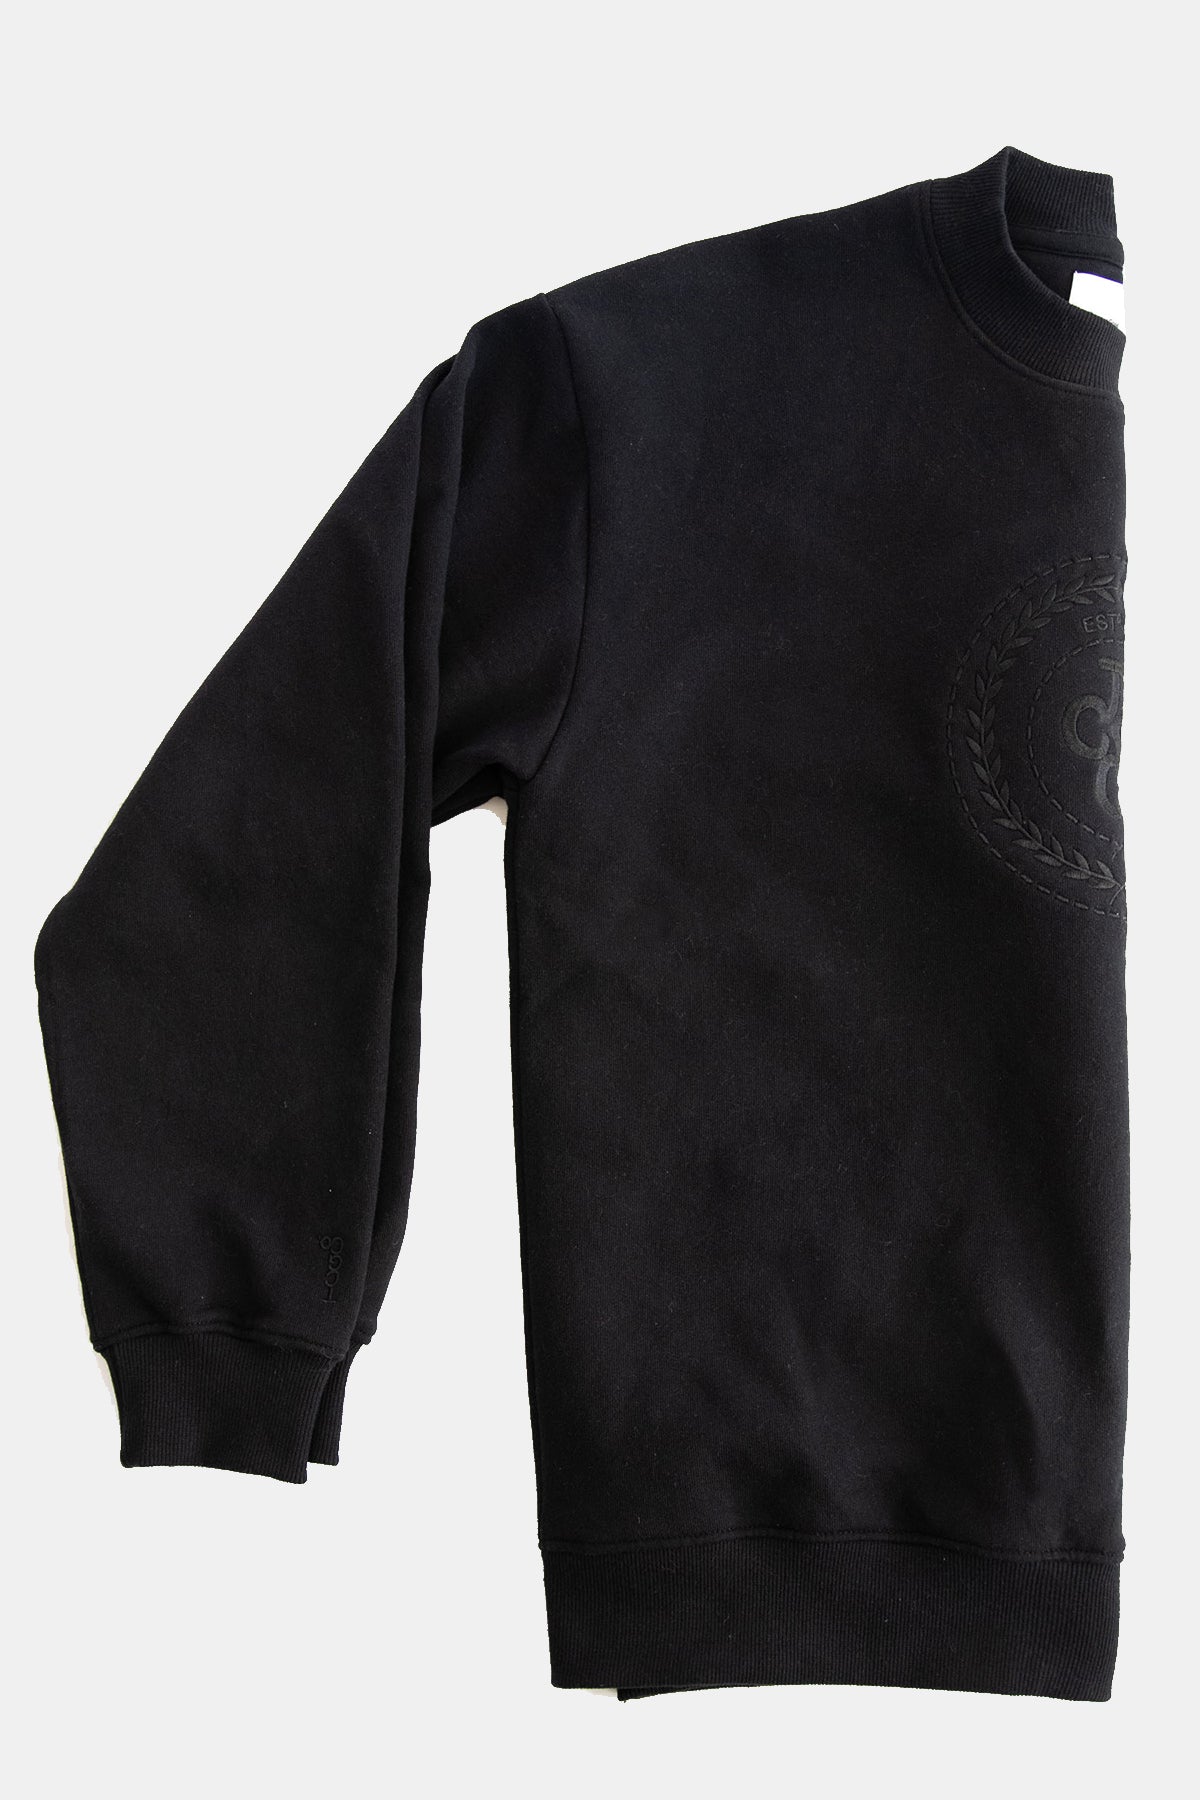 Plain Dane Black Box Fit Sweater - Estd 